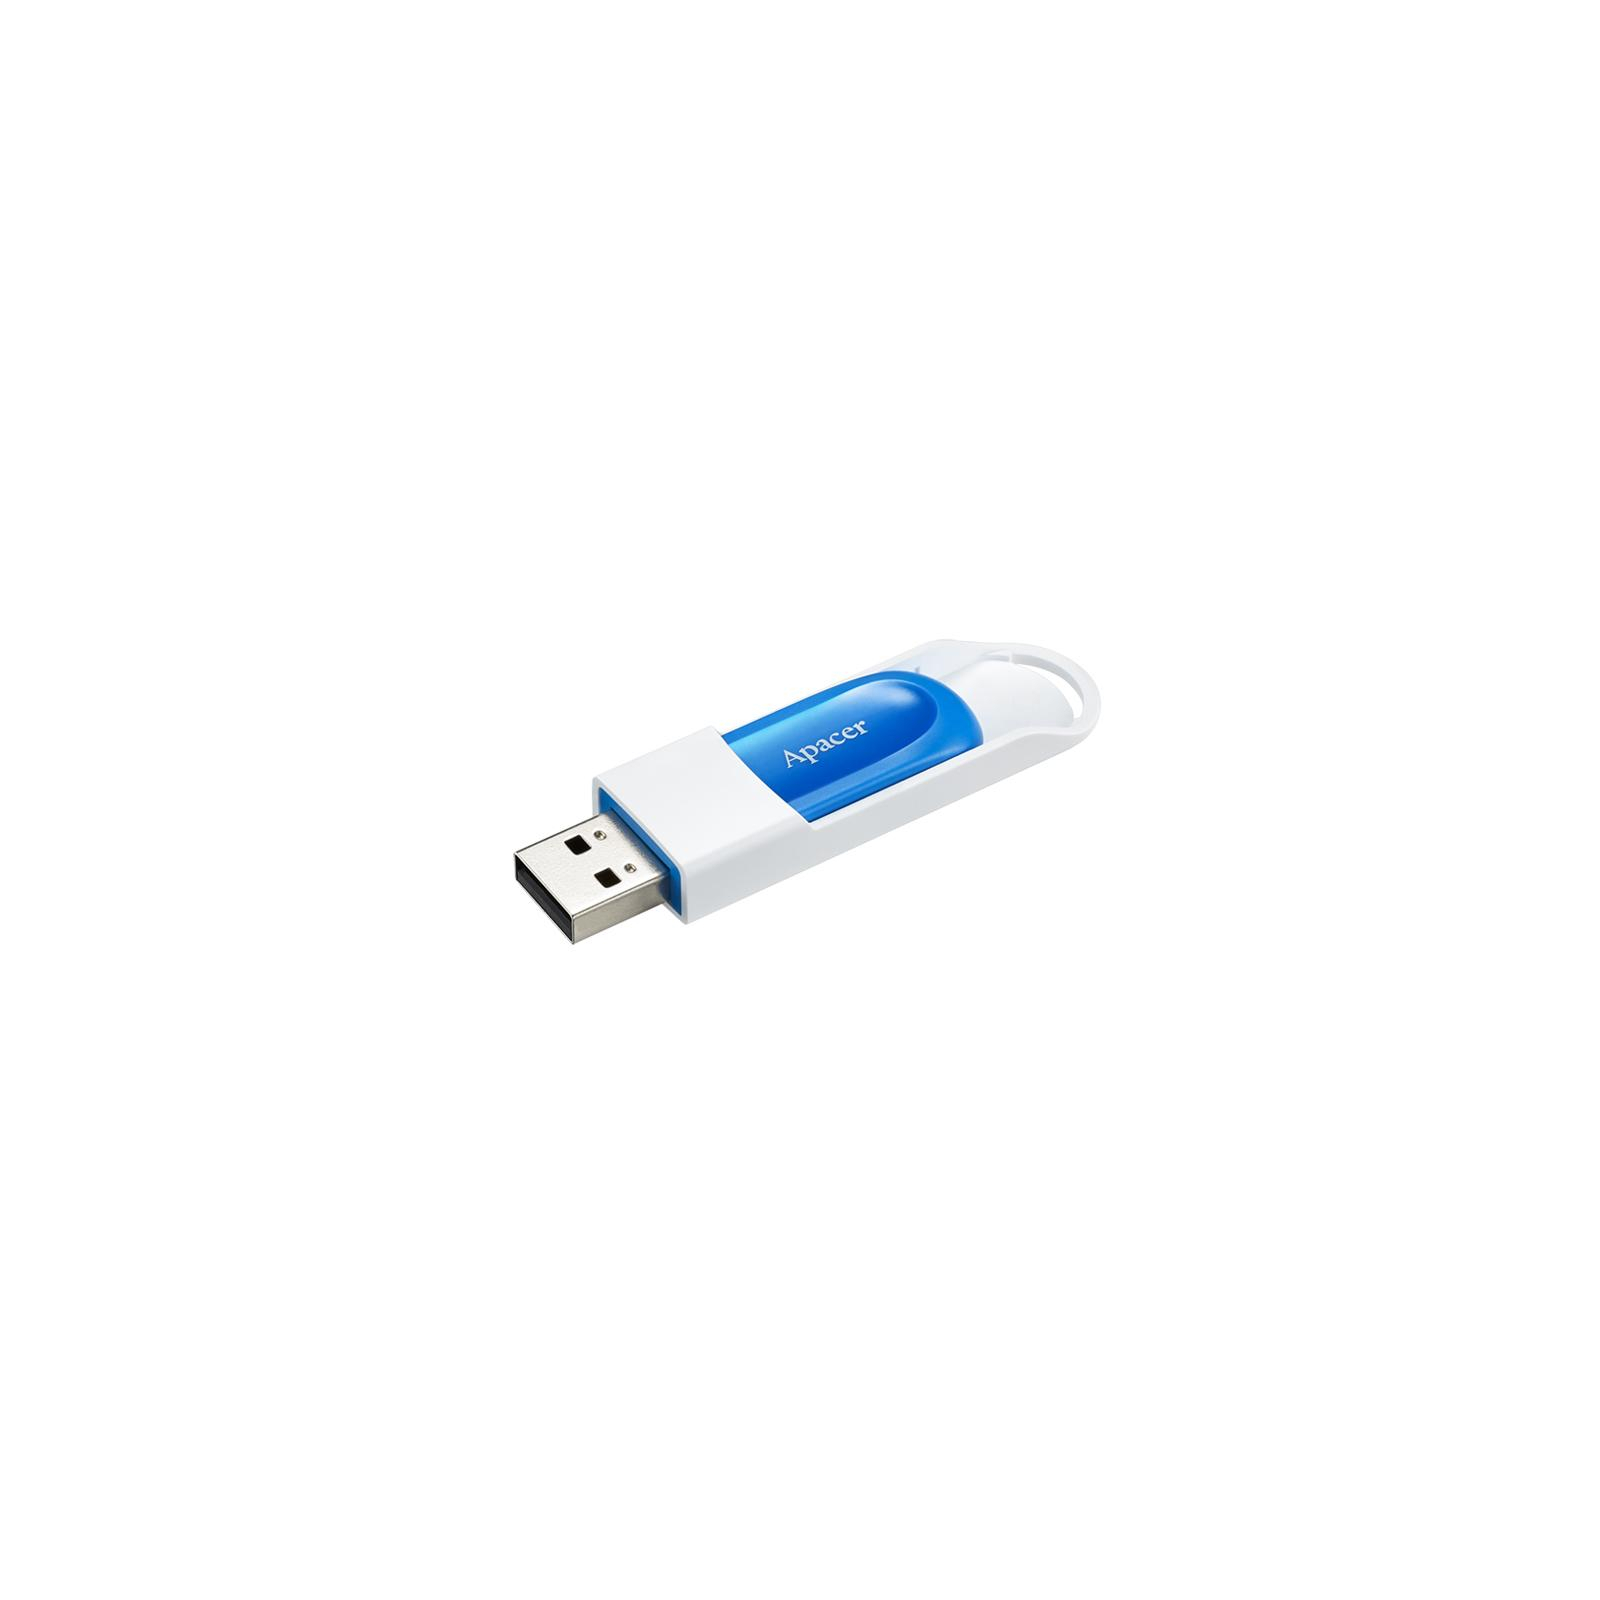 USB флеш накопитель Apacer 8GB AH23A White USB 2.0 (AP8GAH23AW-1) изображение 3